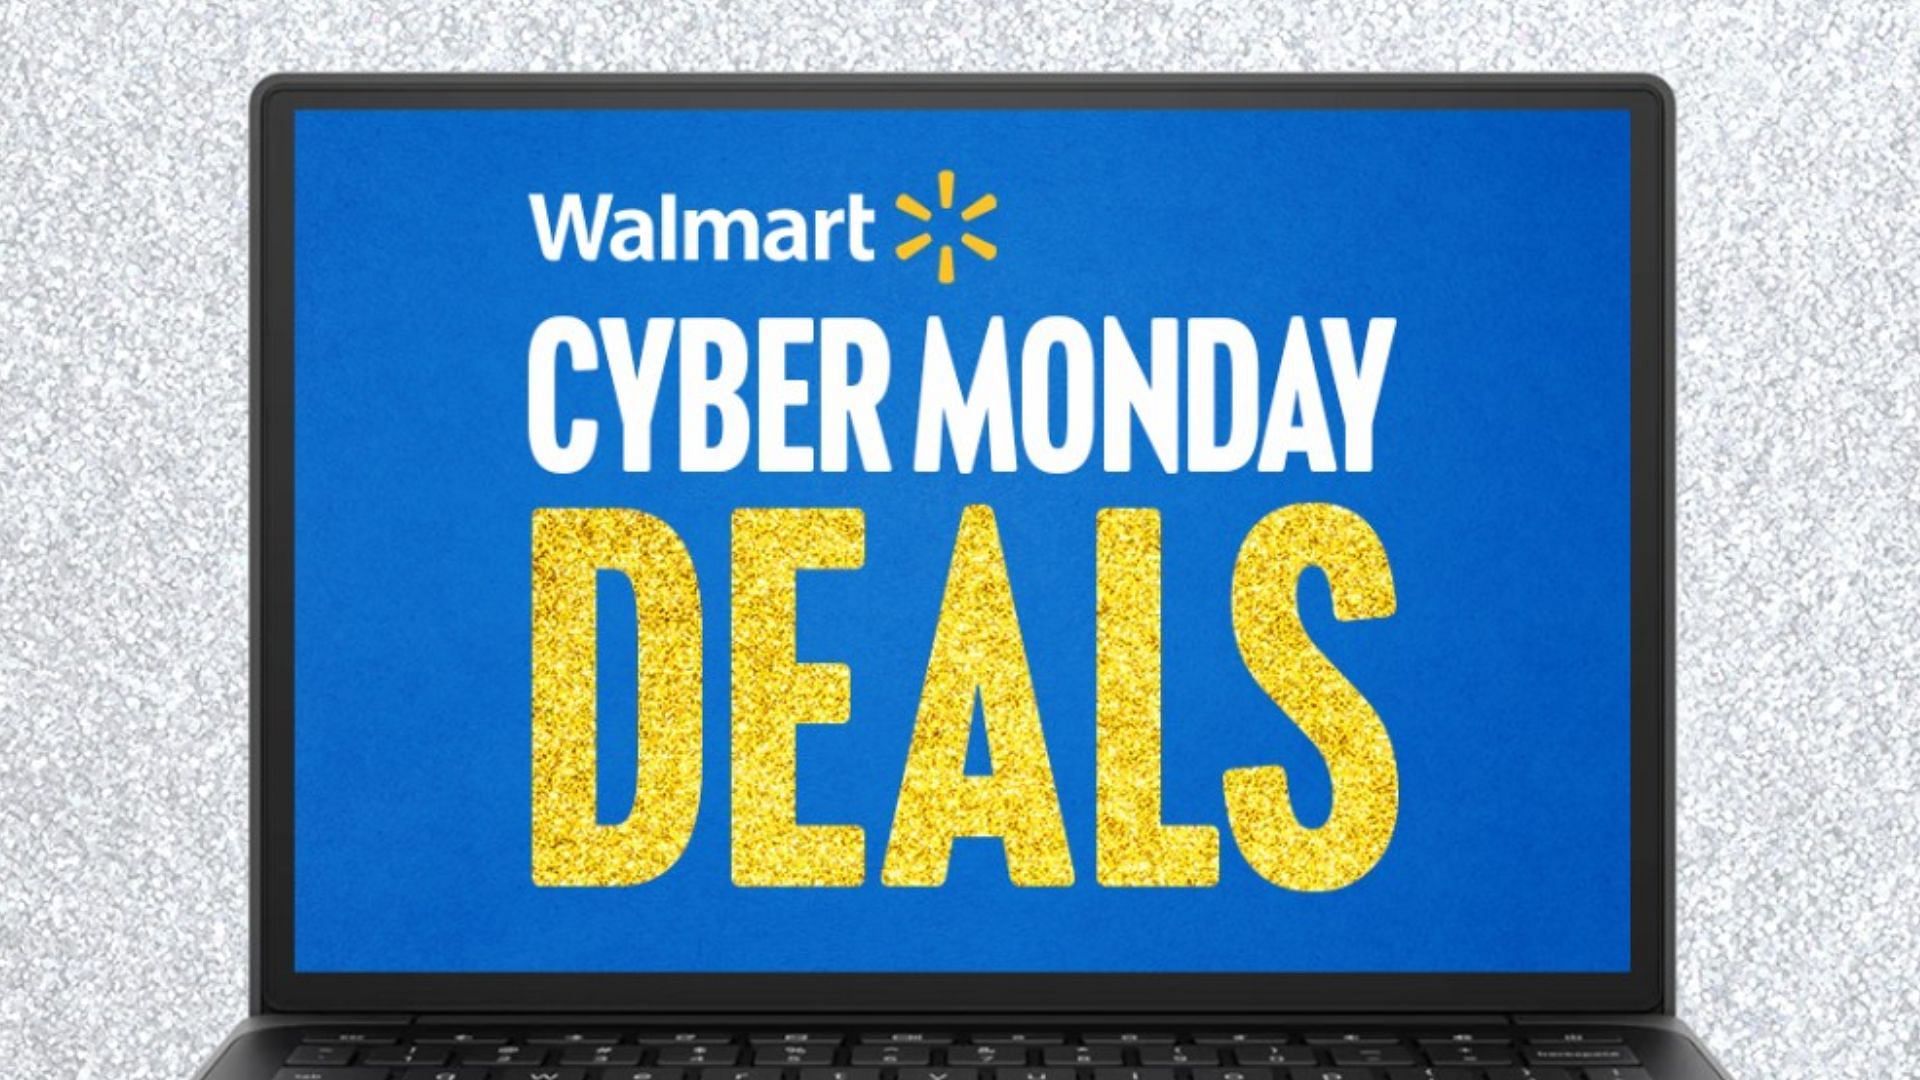 Walmart has some of the best Cyber Monday deals (Image via Walmart)